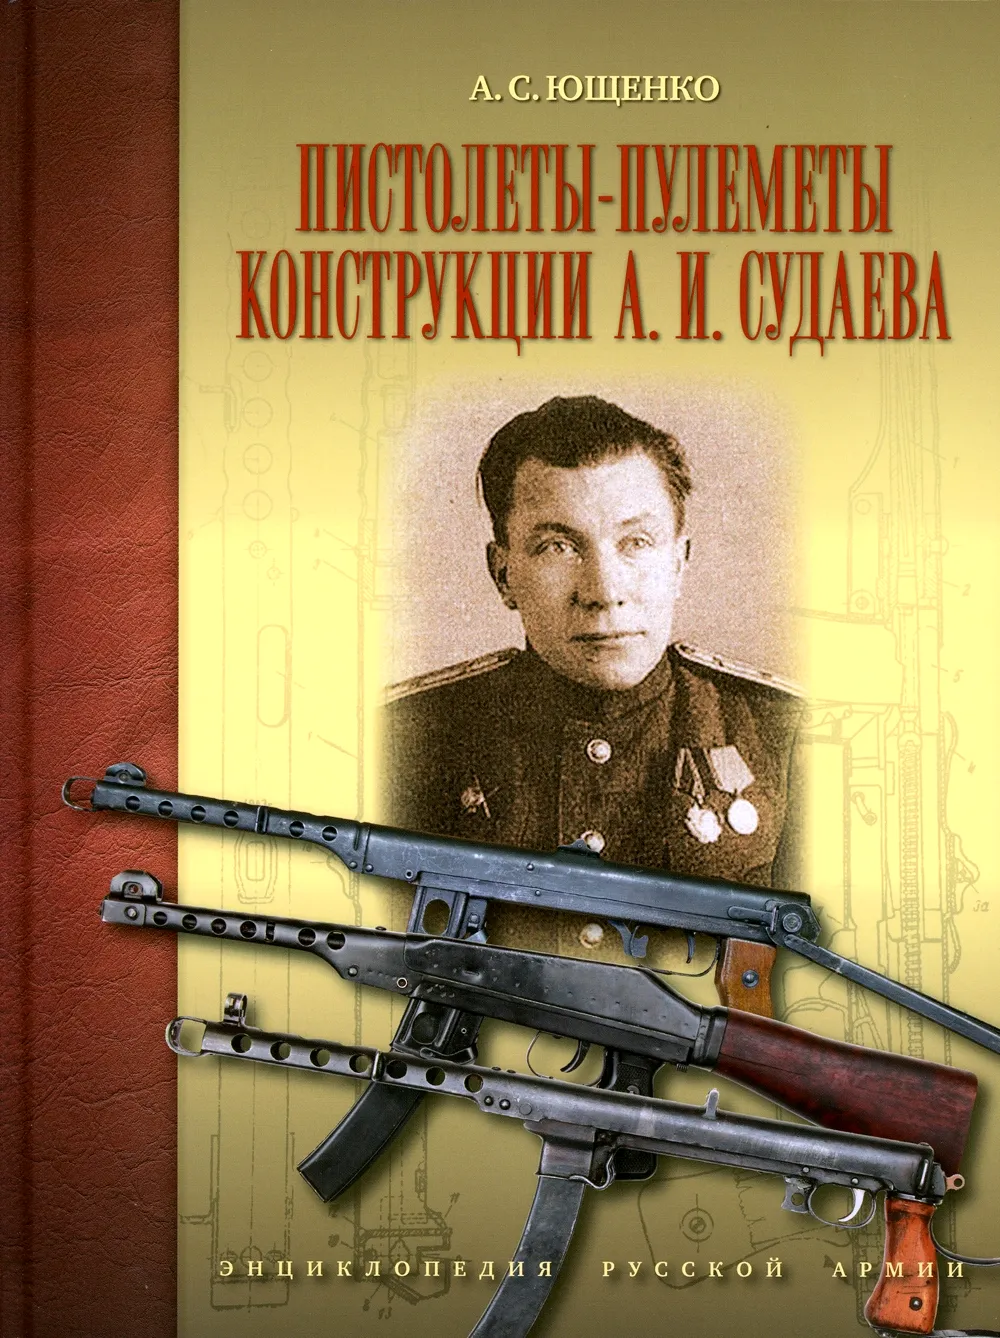 Судаев Алексей оружейник